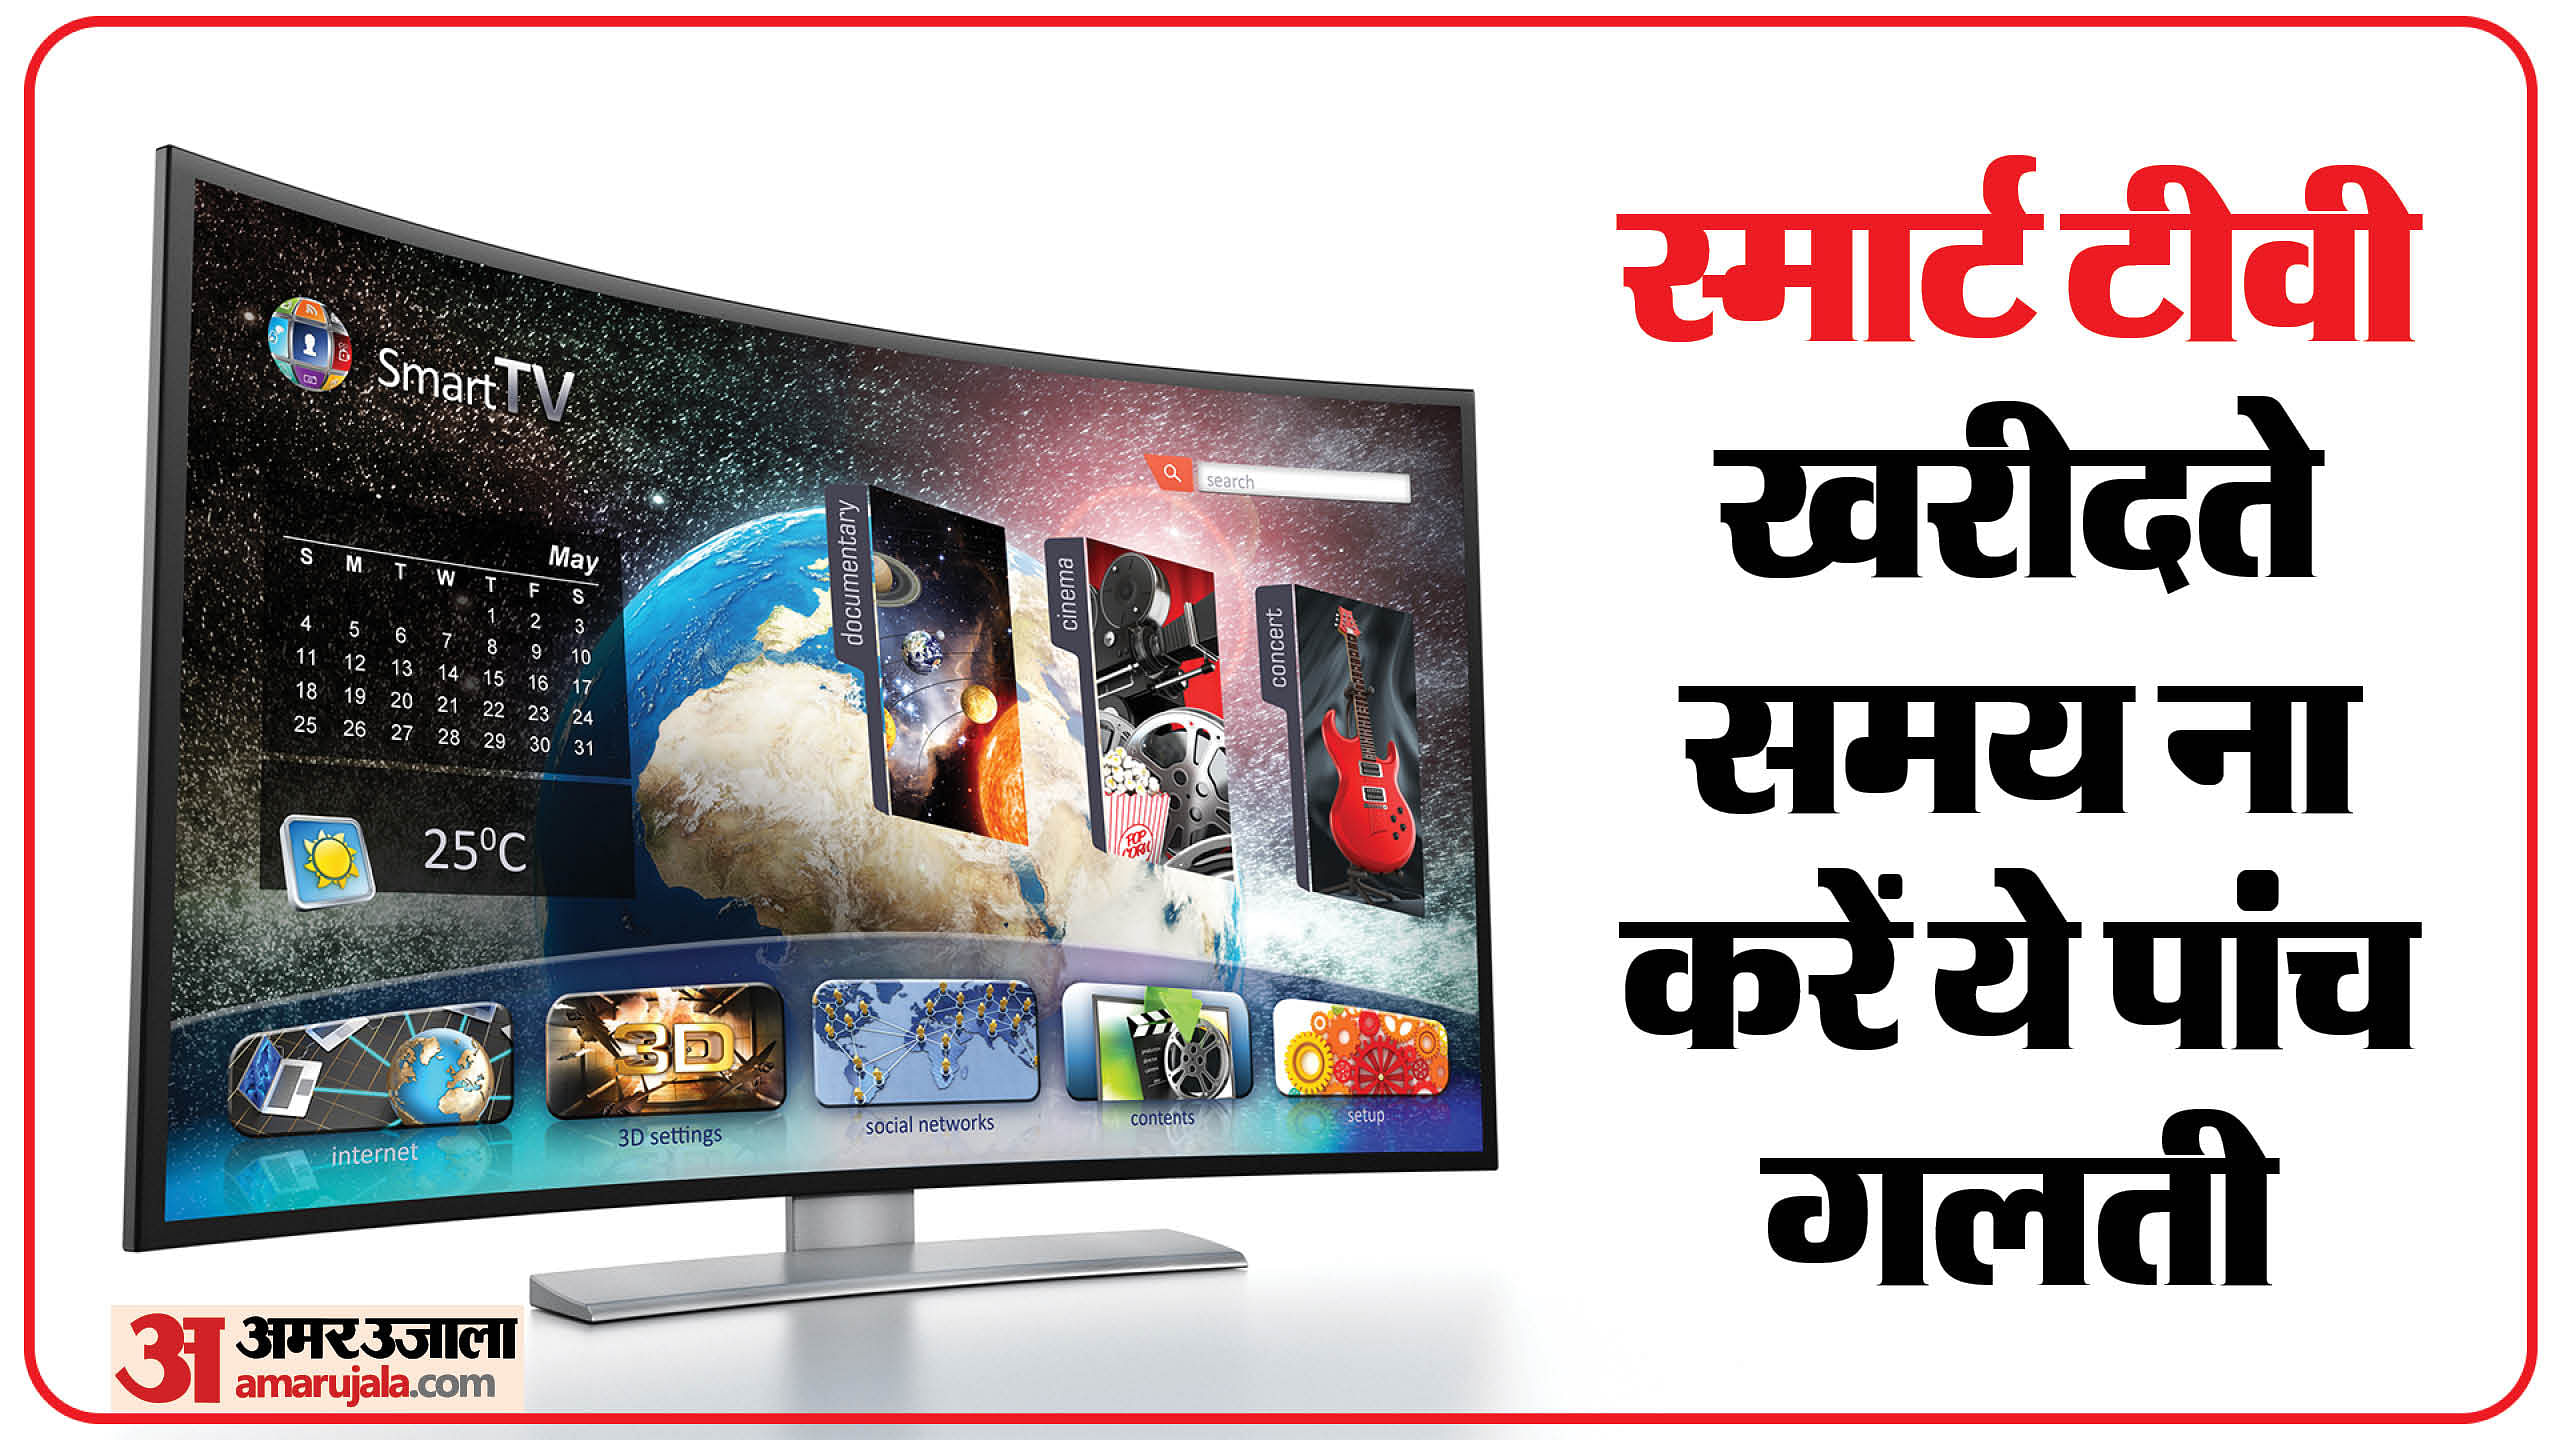 Comprar Smart TV online · Hipercor (375)